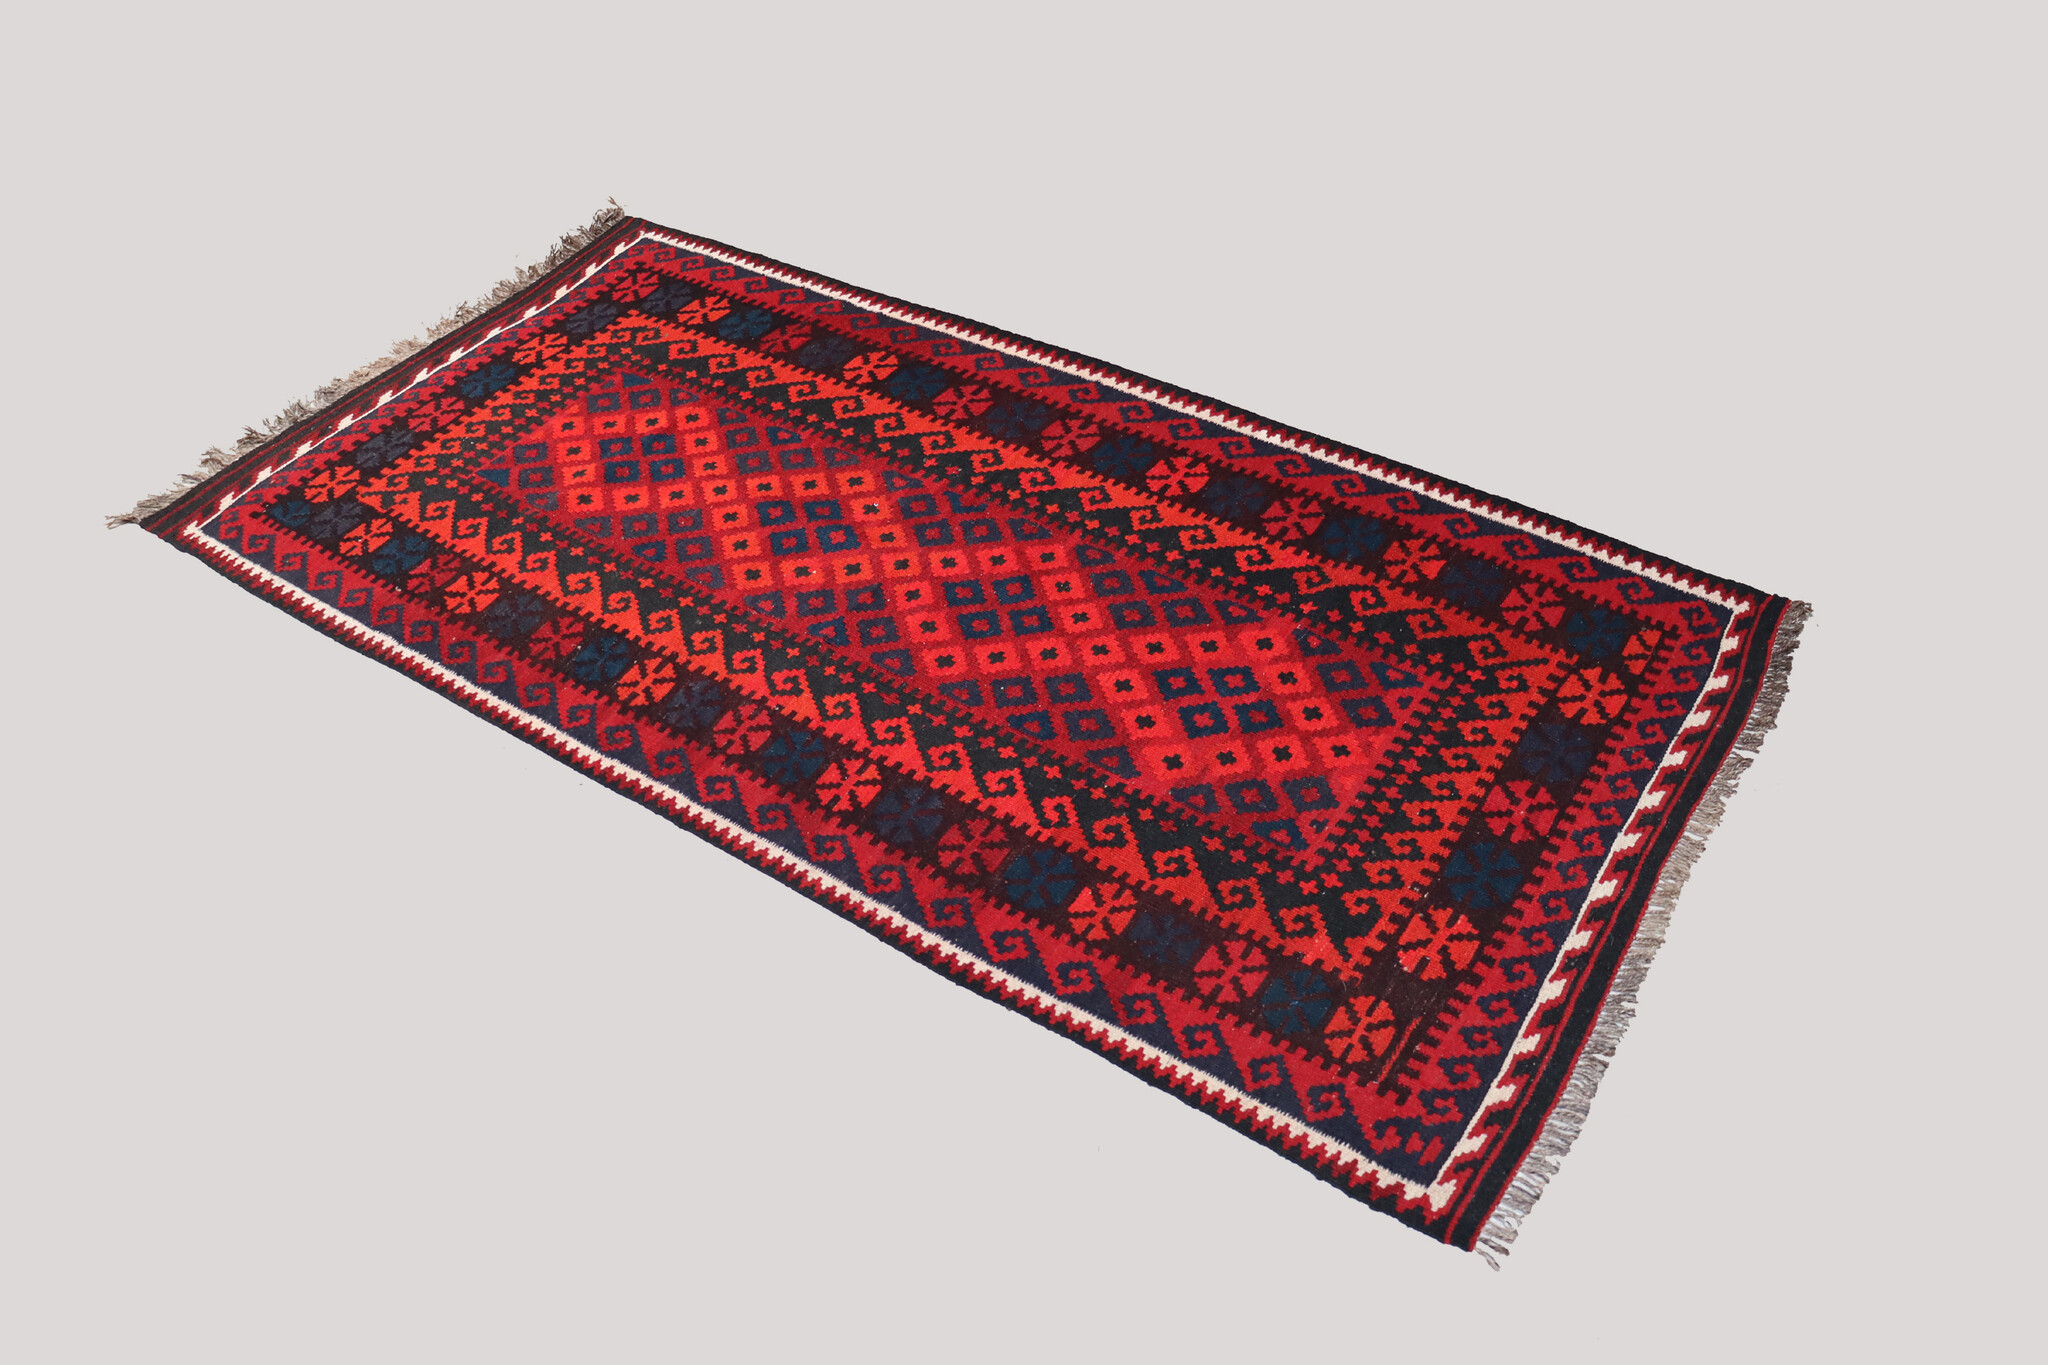 208x103 cm Afghan   nomadic Kilim rug  No:172